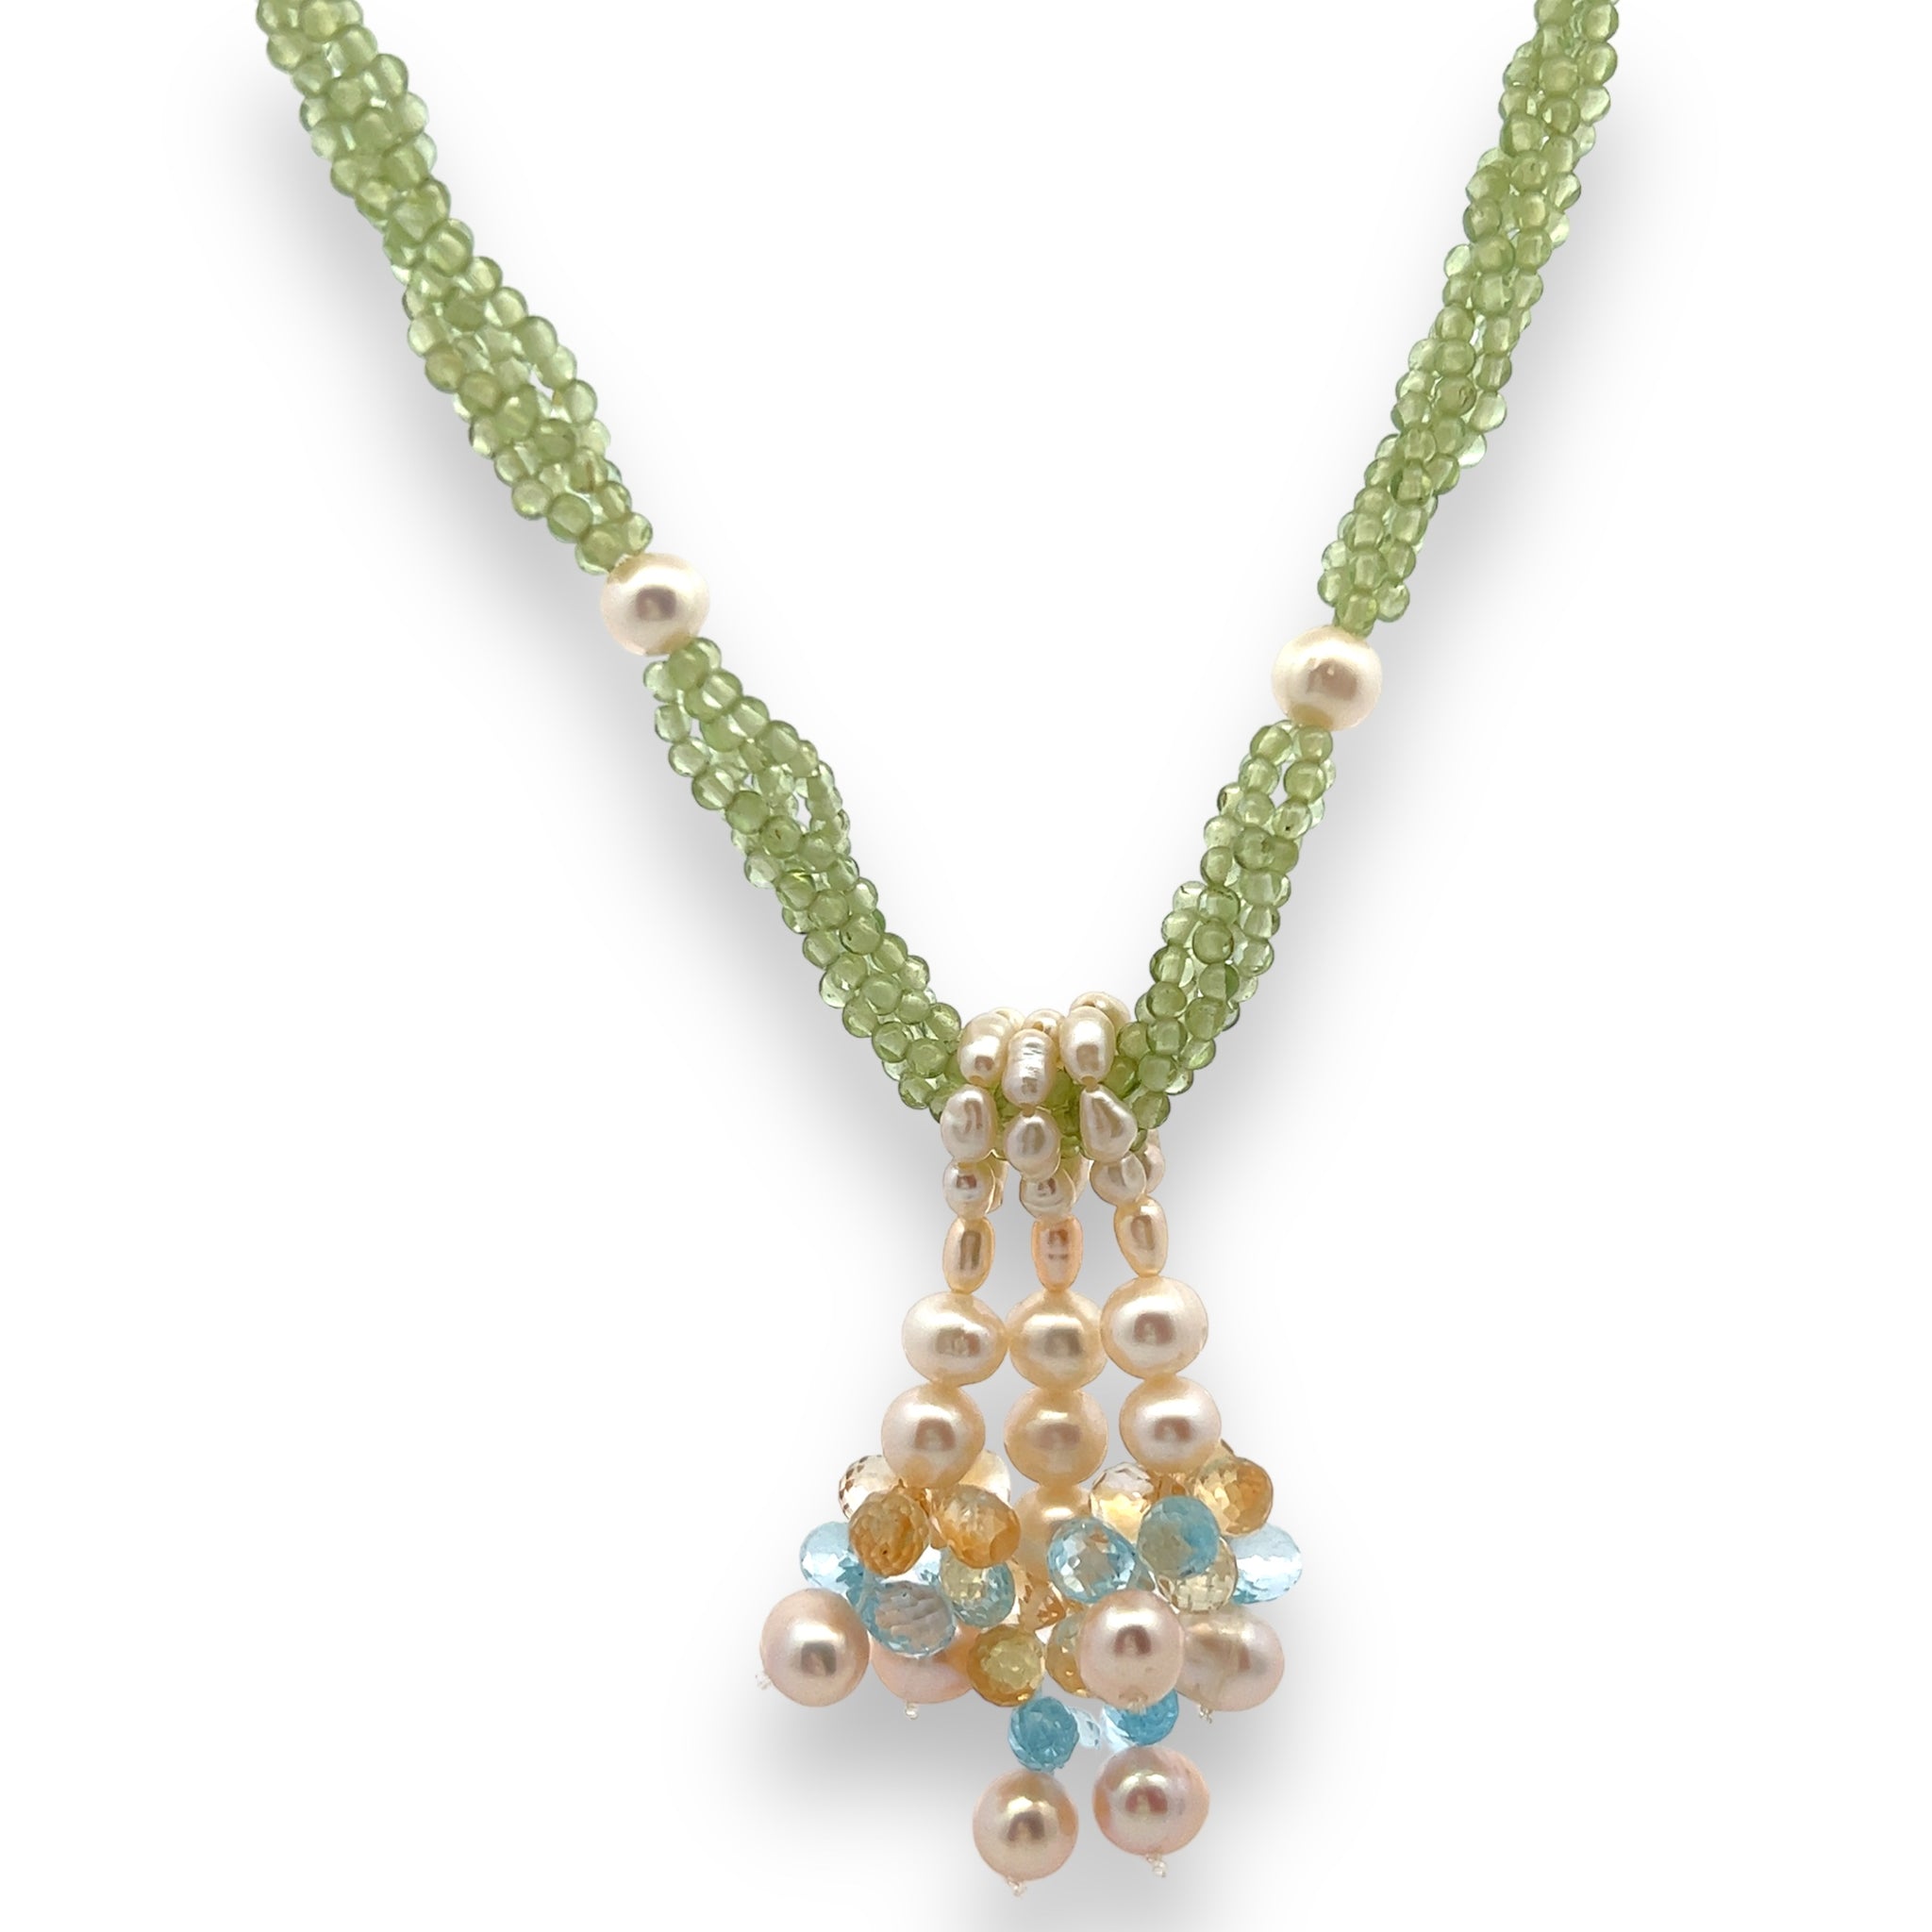 Natural Handmade Necklace 16"-18" Peridot, Blue Topaz, Citrine, Pearls Gemstone Beads Jewellery